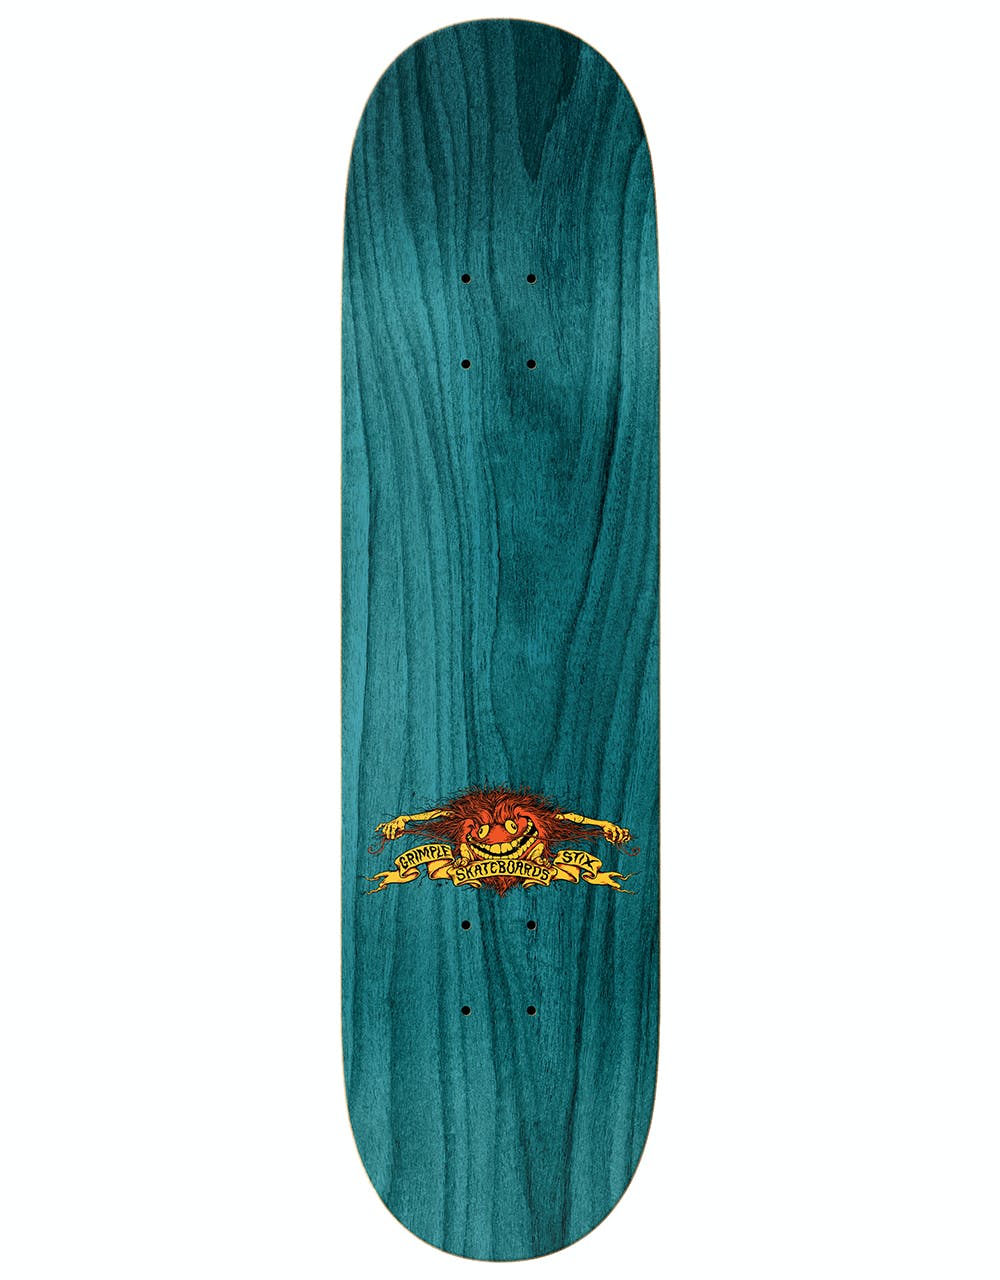 Grimple Stix (Anti Hero) Hewitt Collab Skateboard Deck - 8.38"